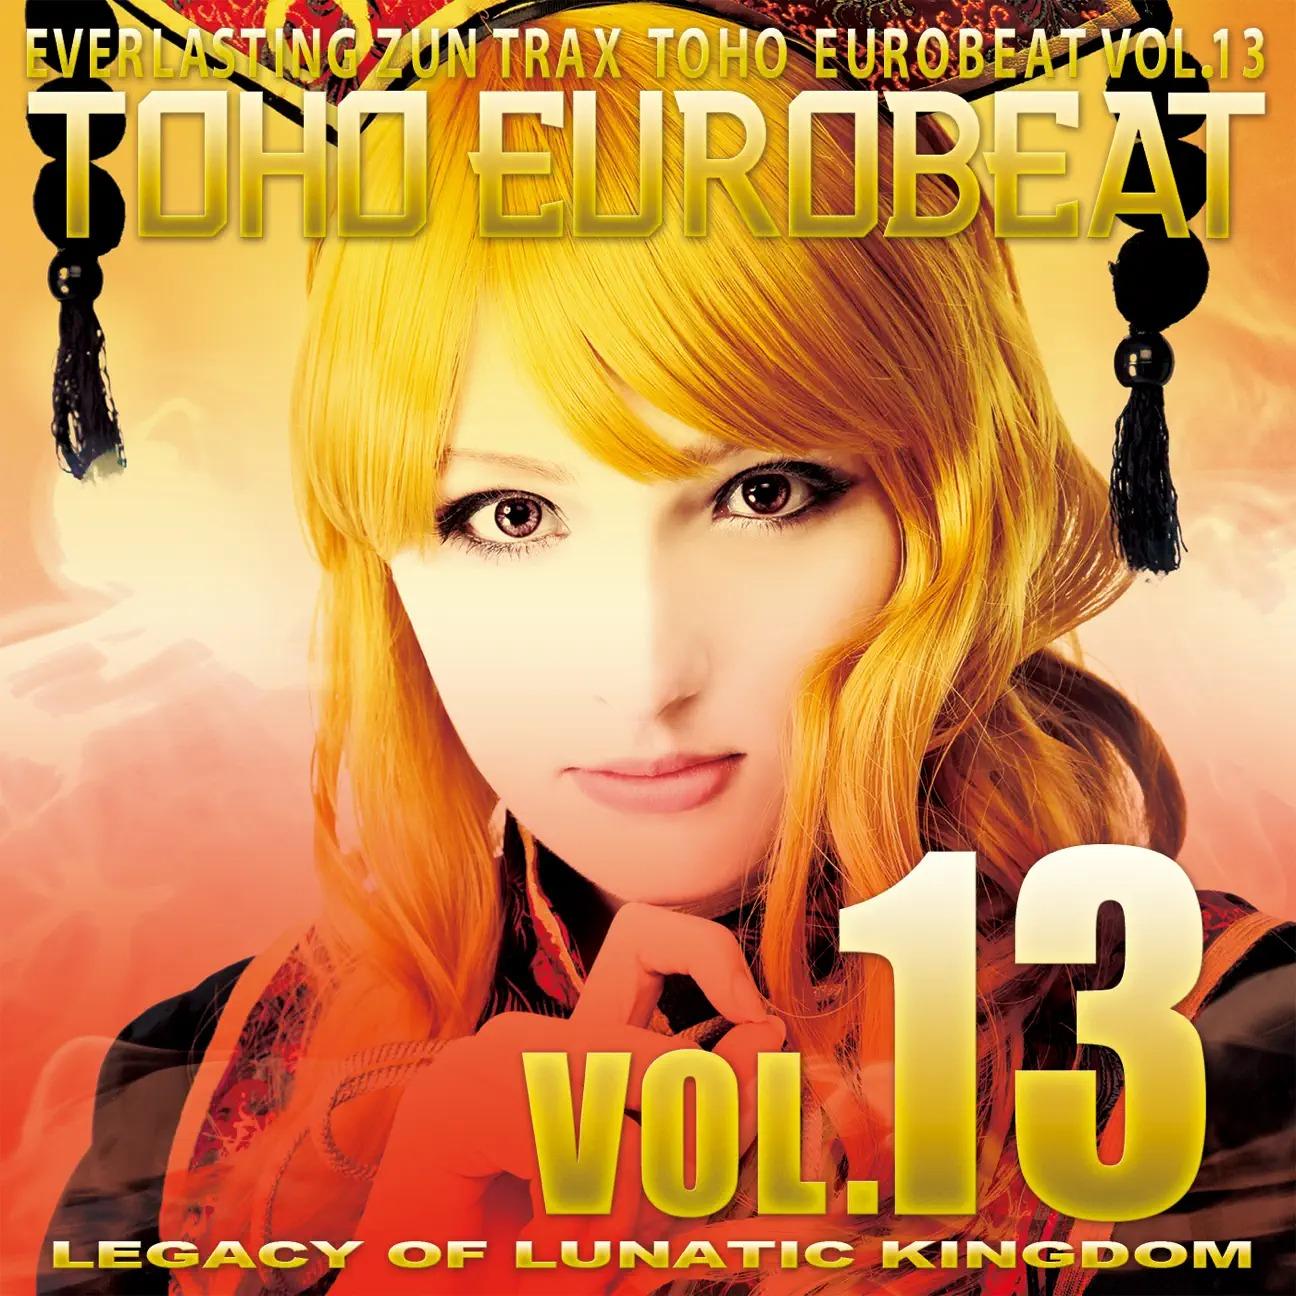 Toho Eurobeat Vol. 13 ~Legacy of Lunatic Kingdom~